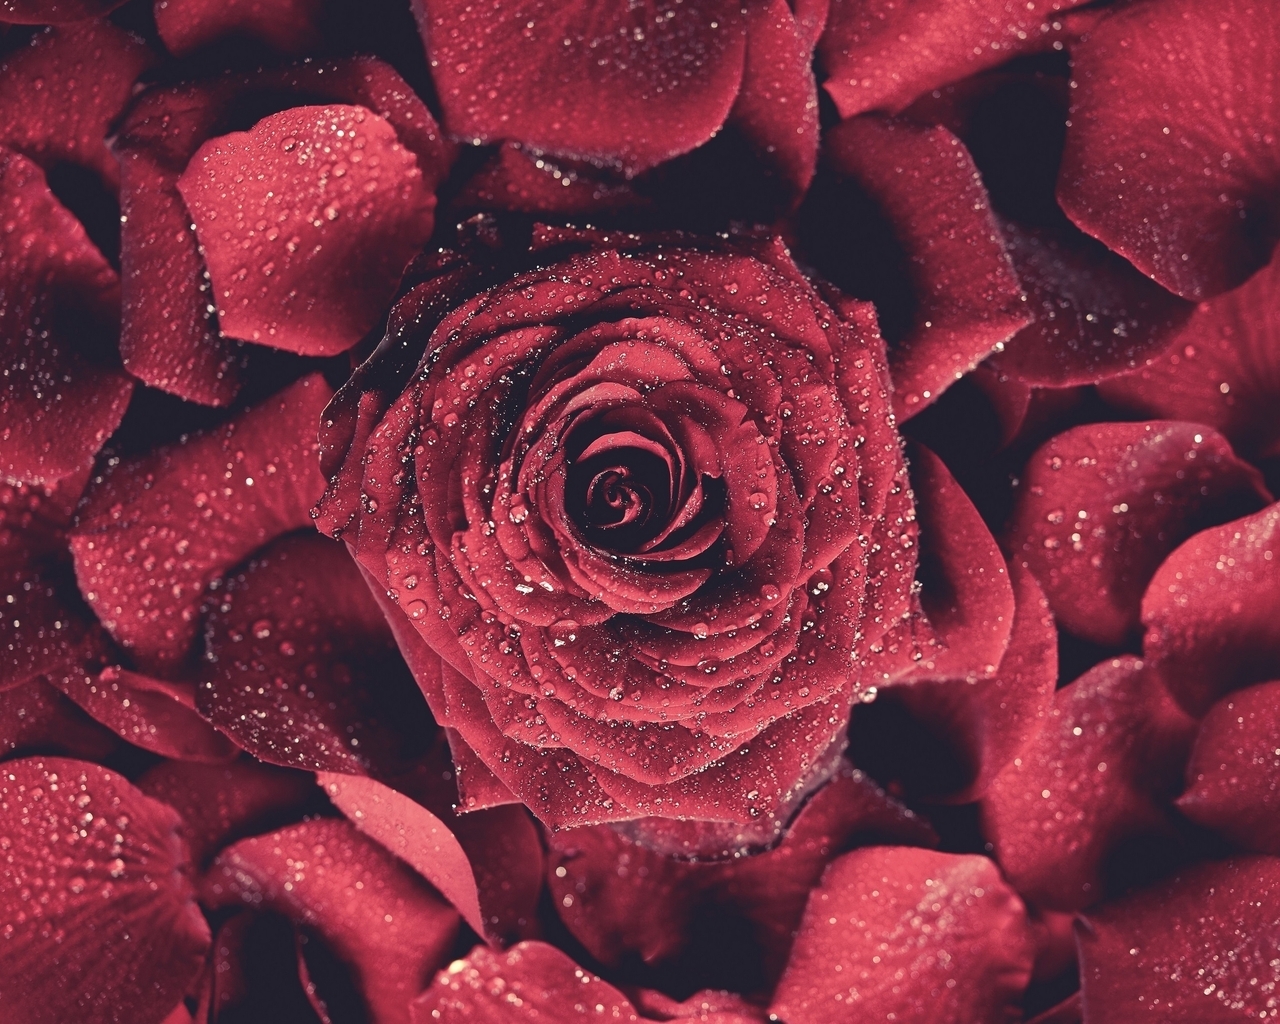 Image: Rose, red, petals, drops, water